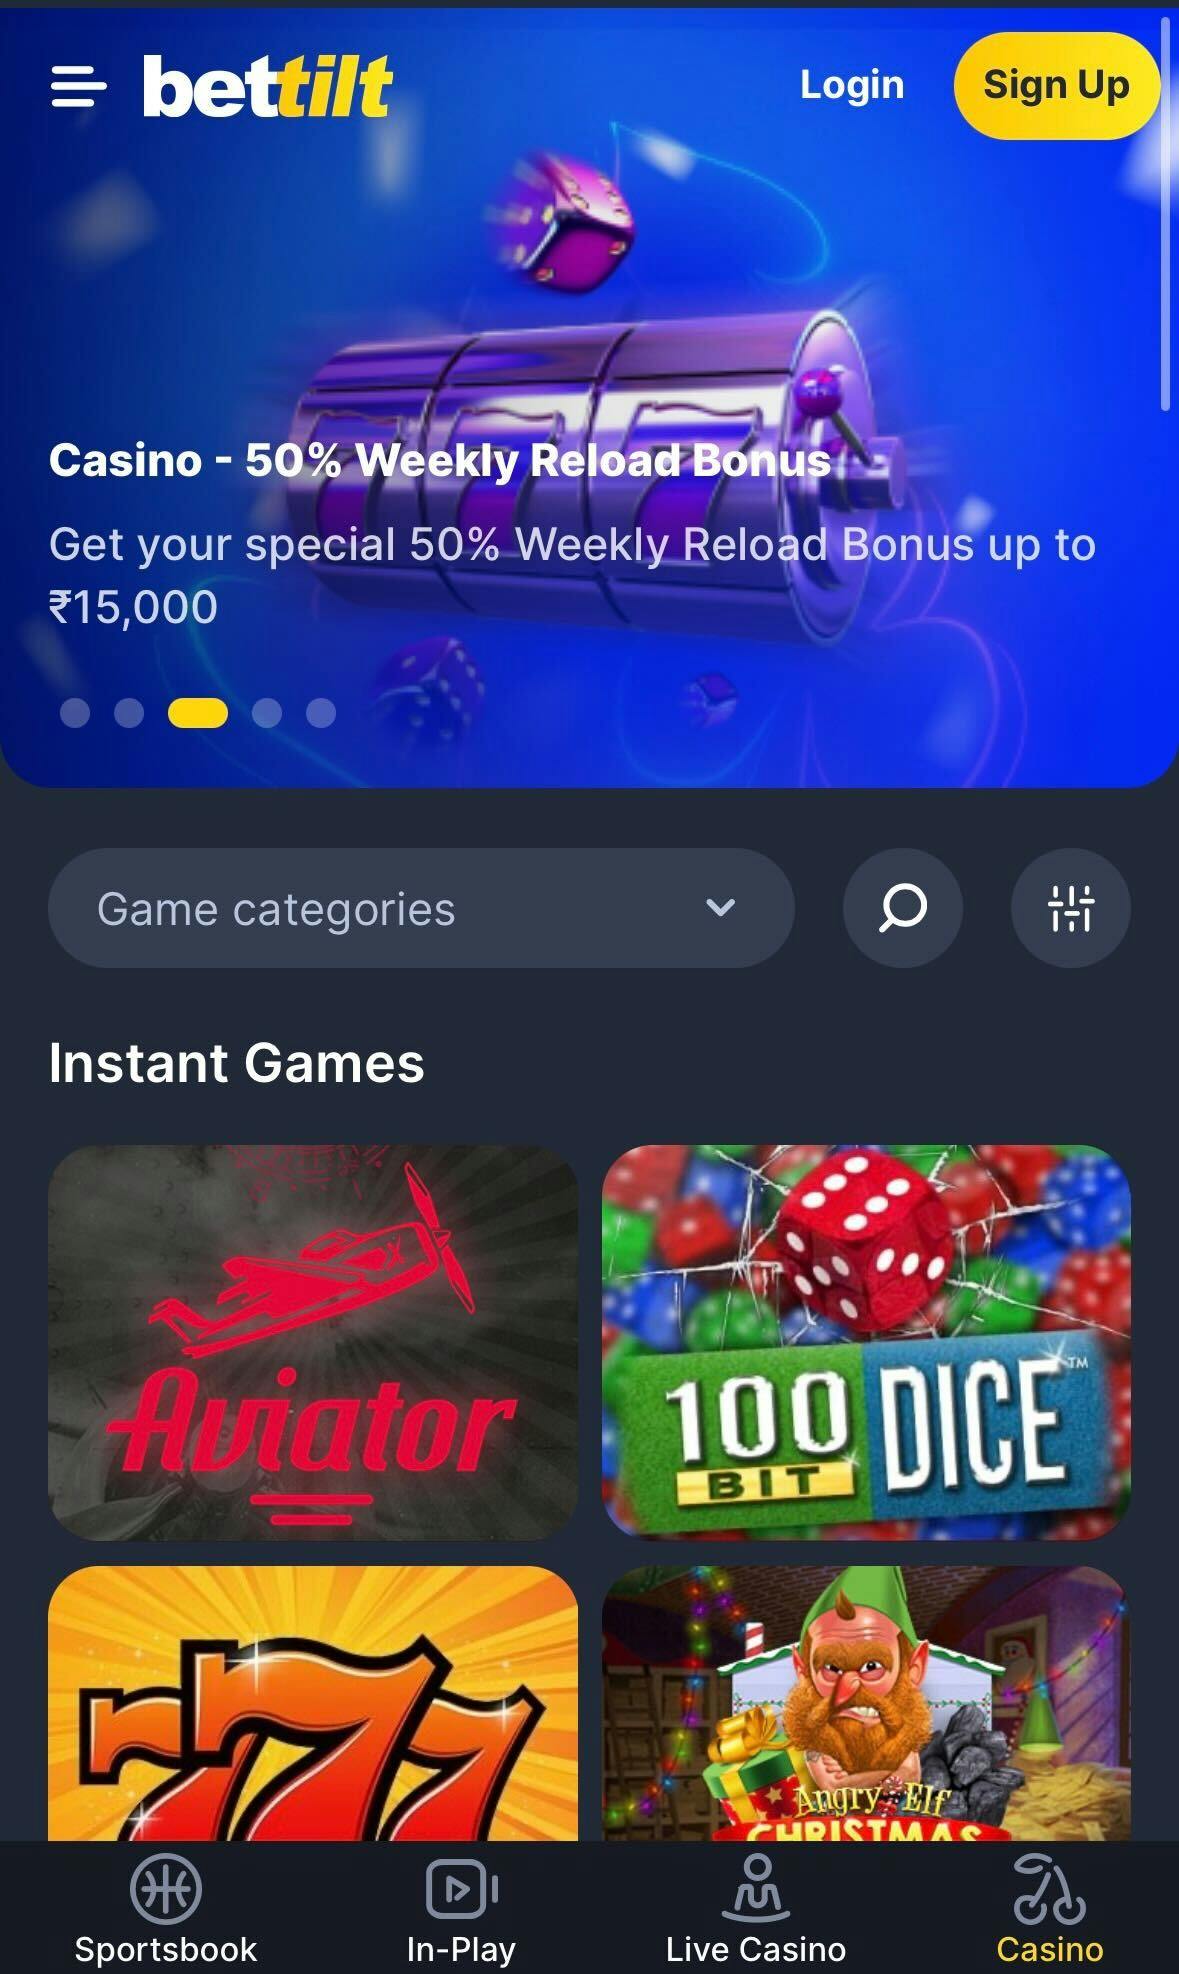 Bettilt app instant games with bonus